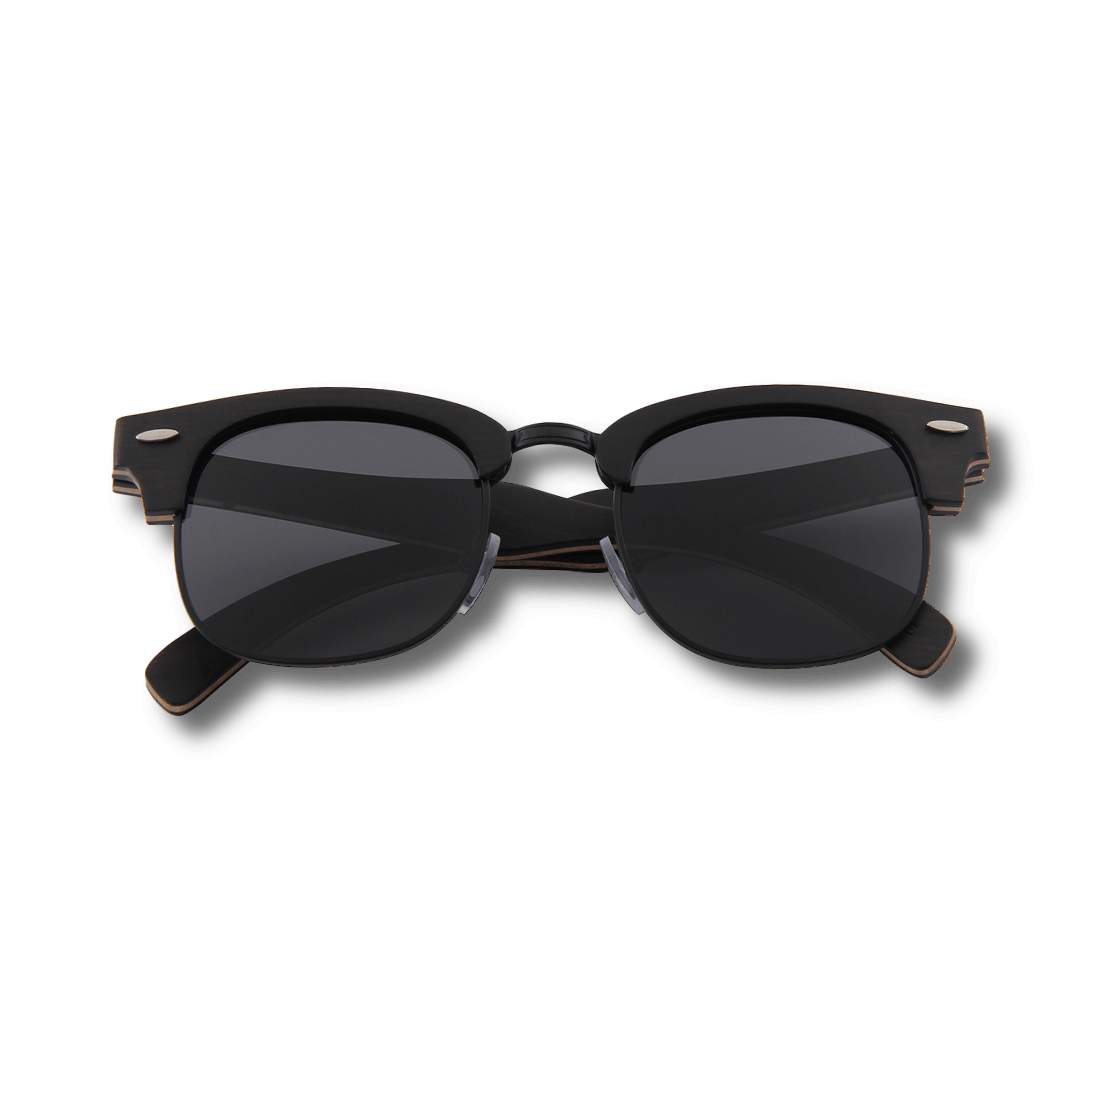 Real Ebony 1/2 Wood Browline Style RetroShade Sunglasses by WUDN, Sunglasses - WUDN